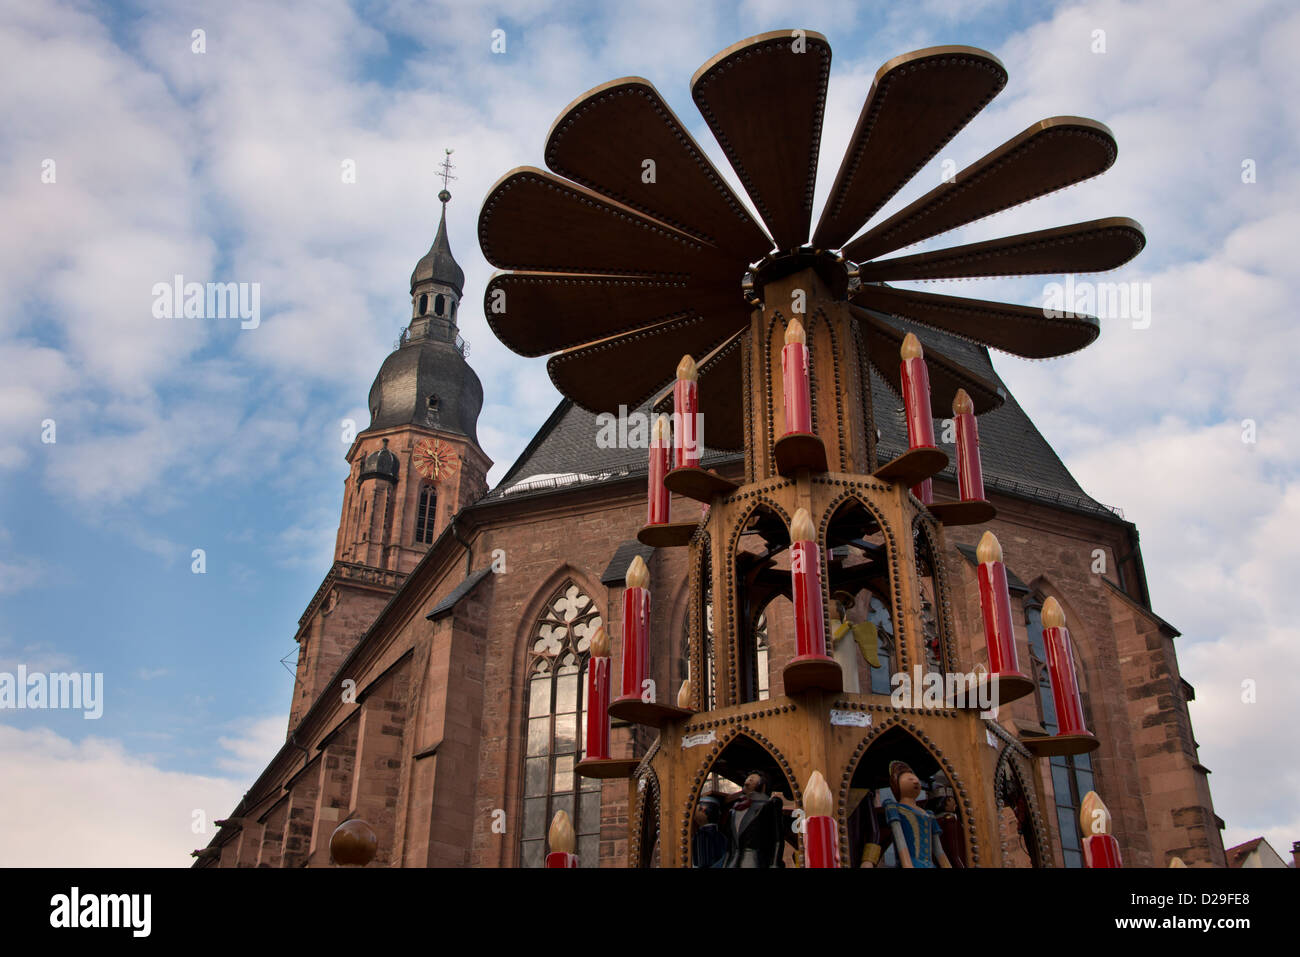 Germany, Heidelberg. Giant traditional Christmas pyramid (aka Weihnachtspyramiden). Stock Photo